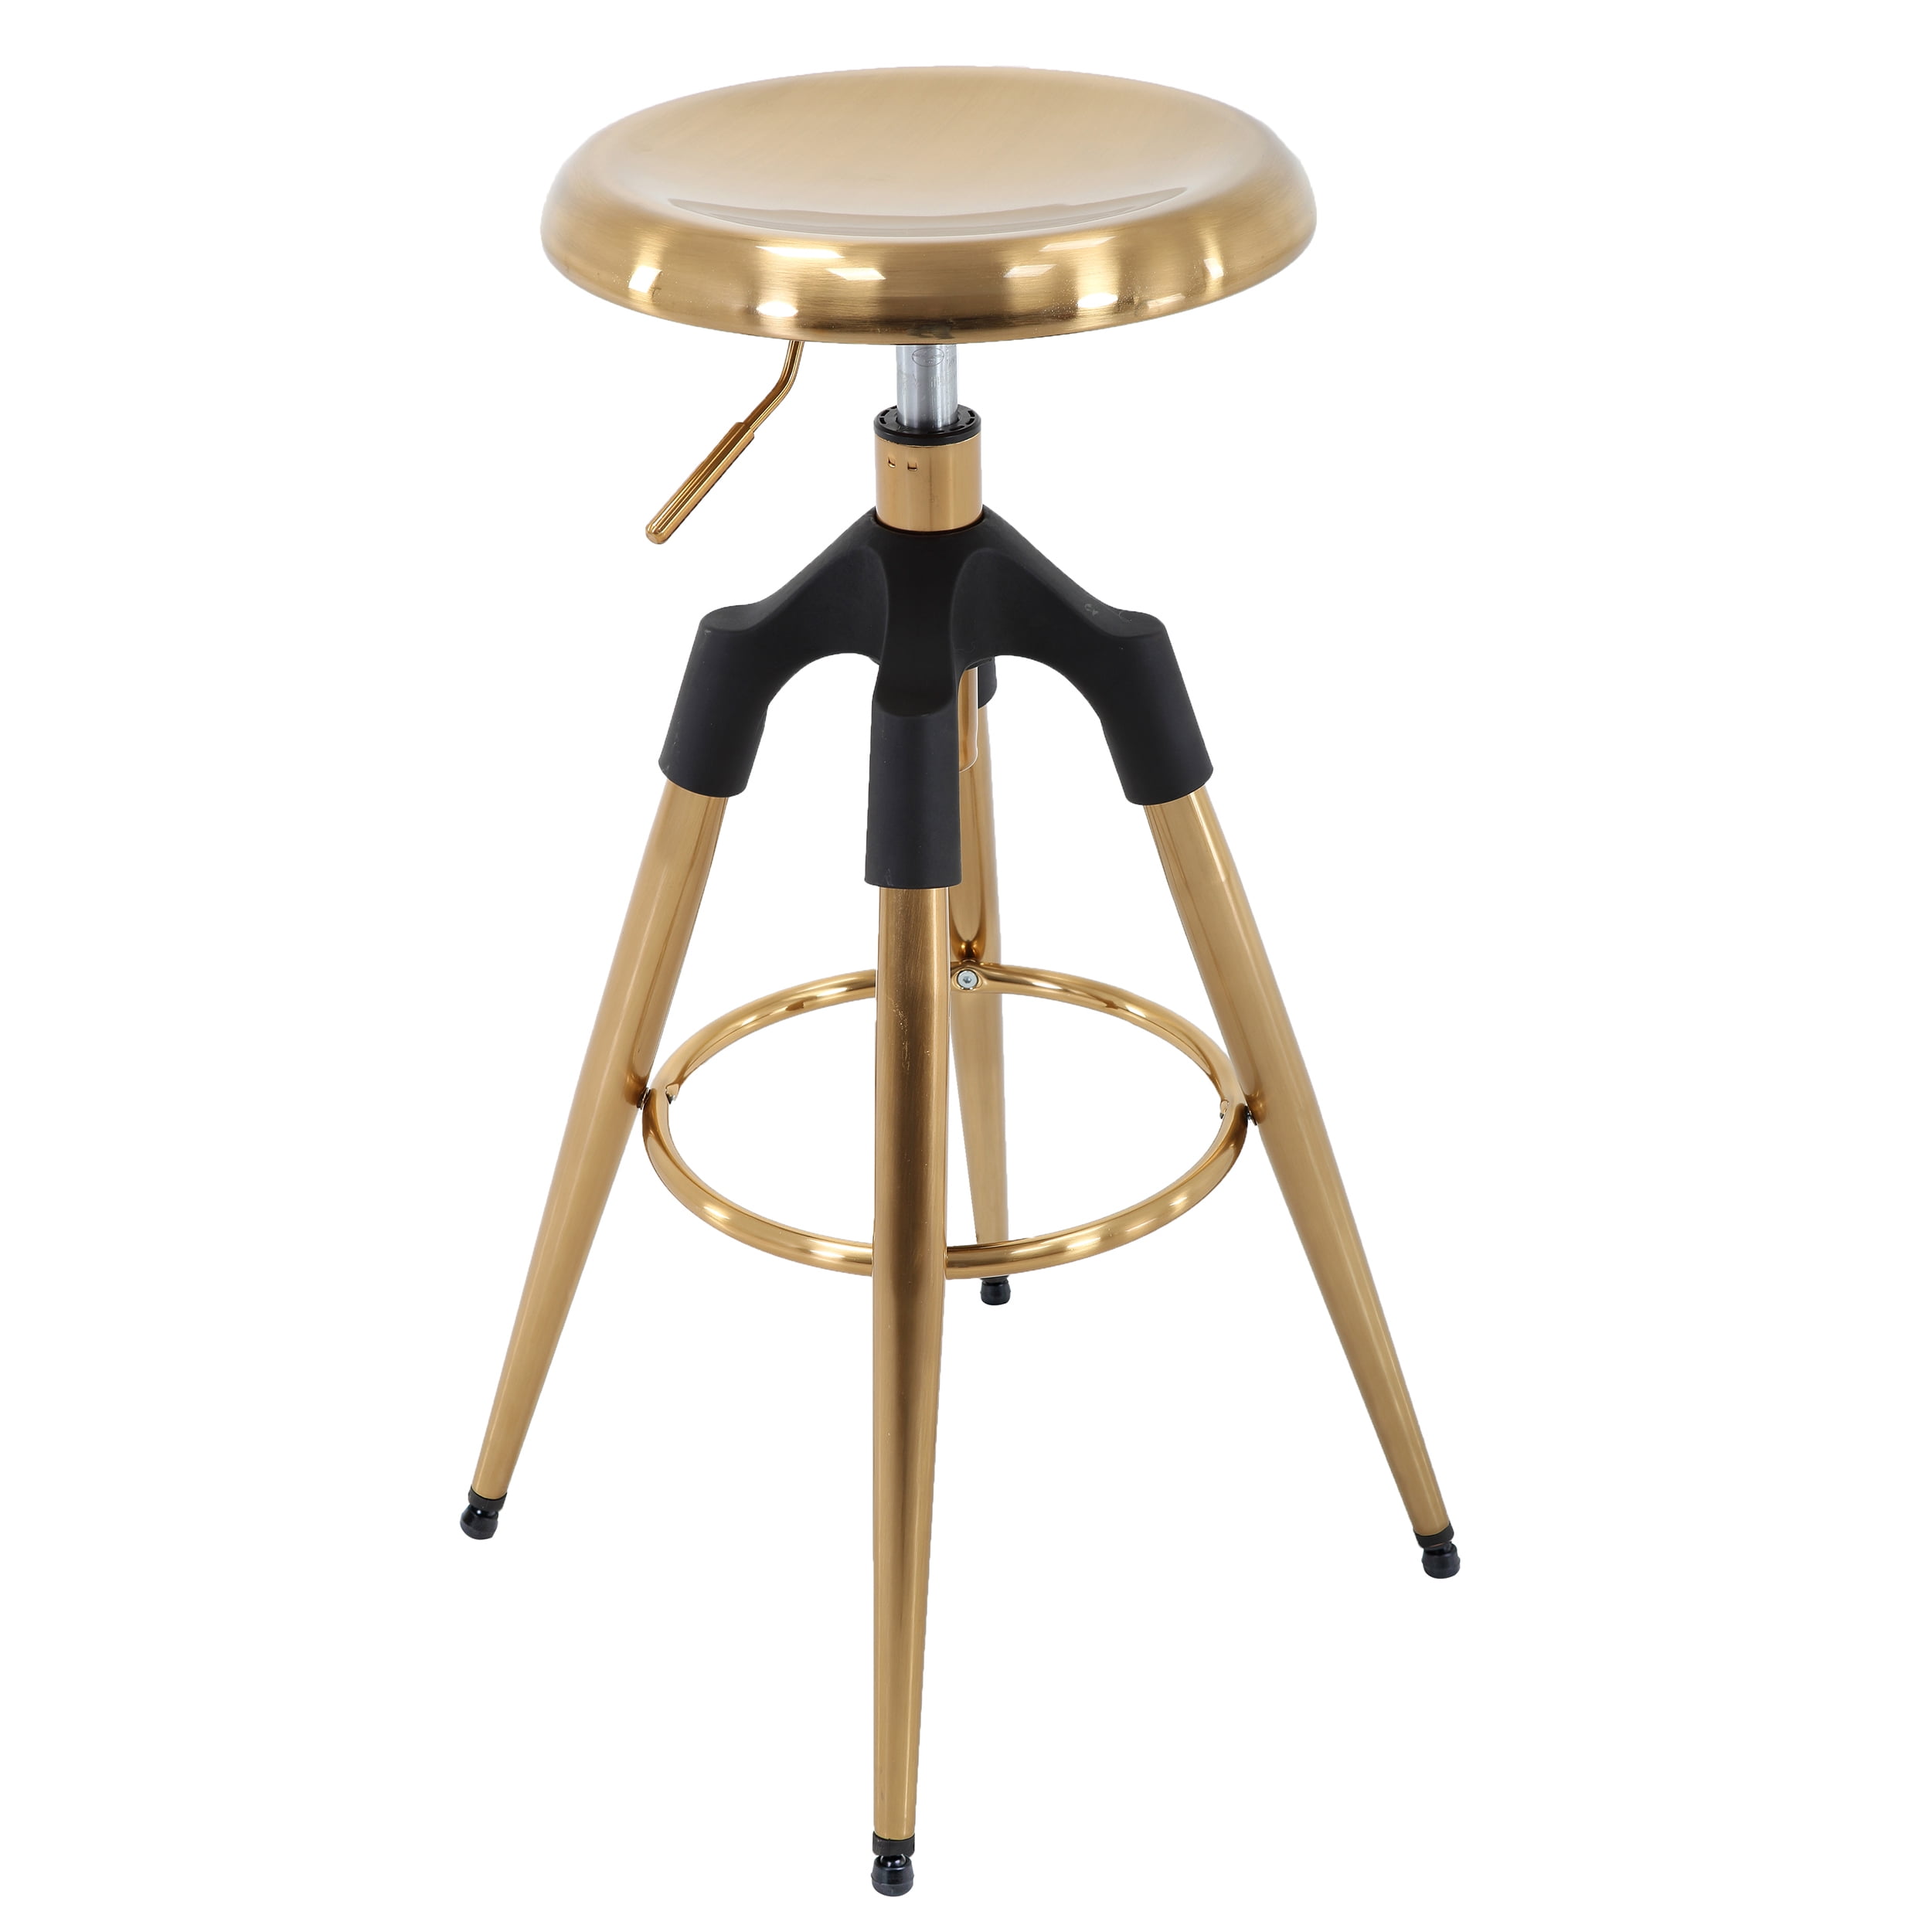 Chapet Saddle Stool Massage Rolling Work Chair For Beauty Salon Kitchen Spa,Adjustable Hydraulic Stool on Wheels Black